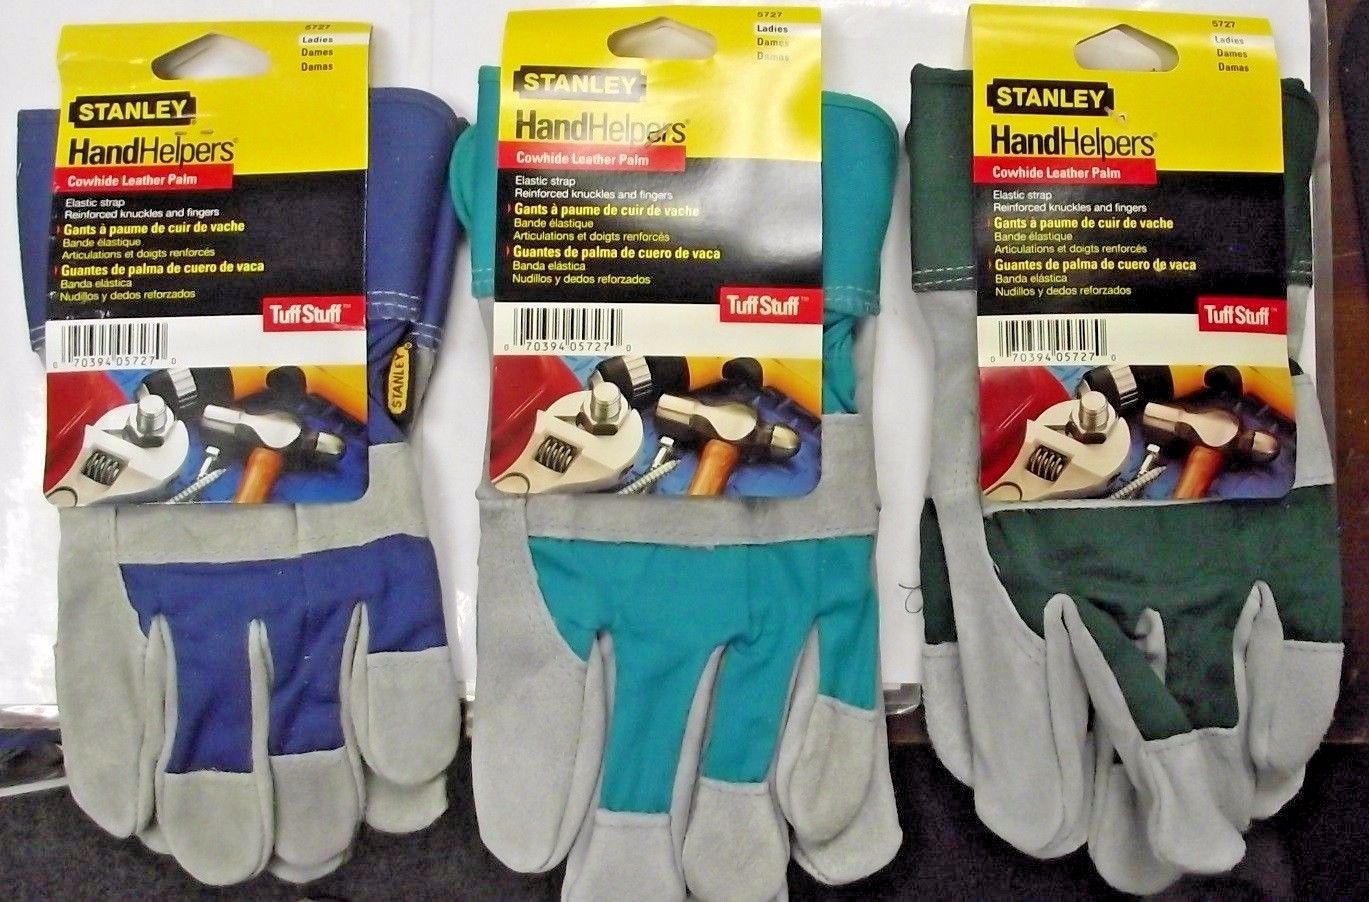 Stanley 5727 Ladies Cowhide Leather Palm Gloves Tuff Stuff One Pair